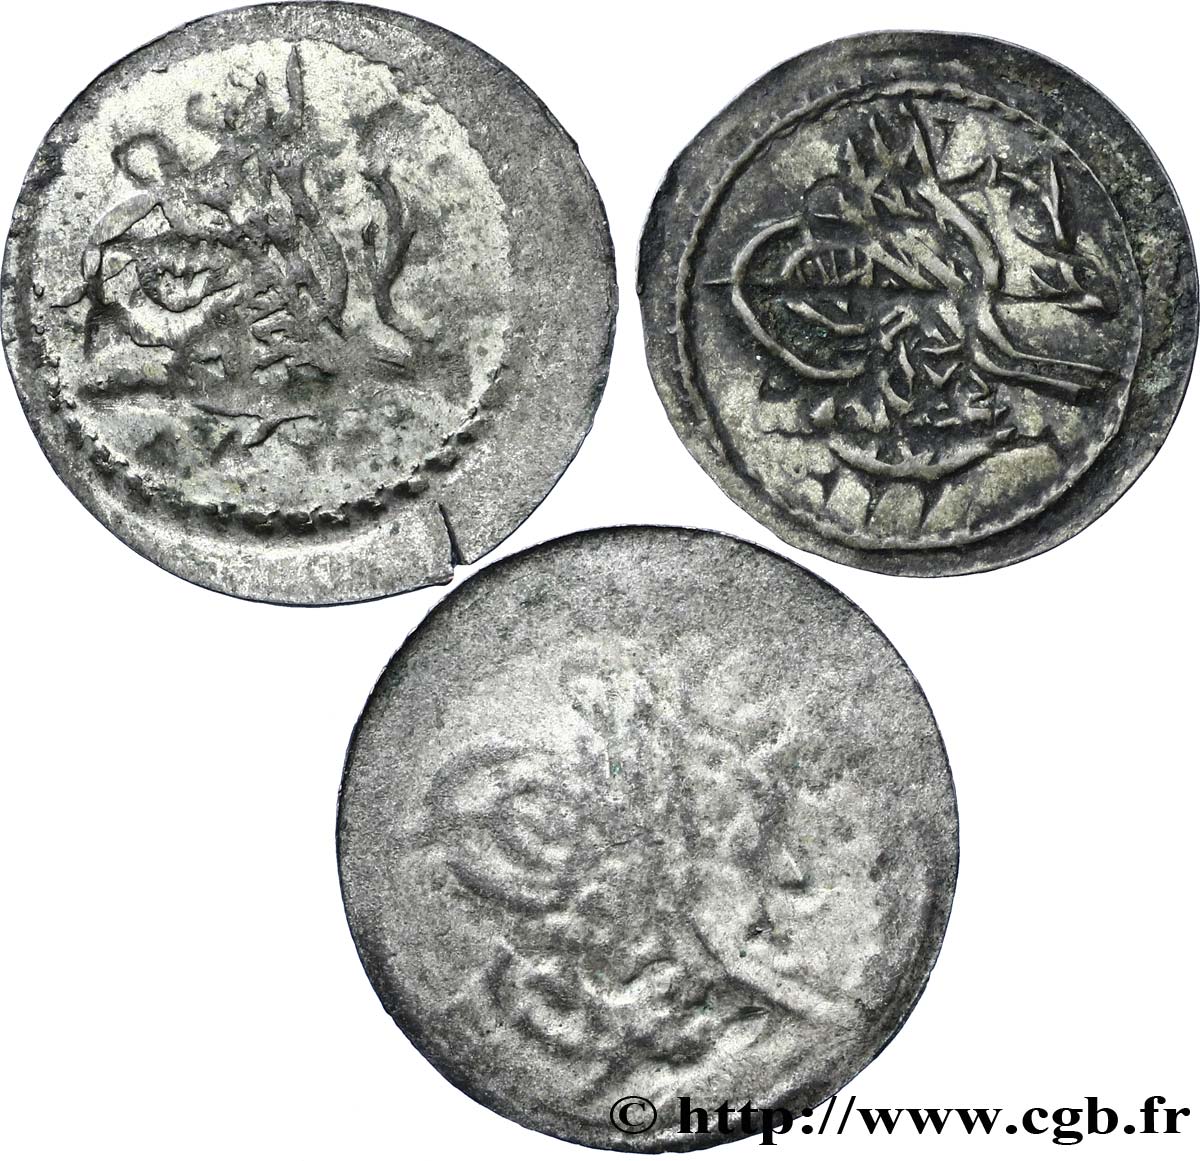 TURQUíA Lot de 3 pièces de 1 Para frappe au nom de Mahmud II AH1223  n.d Constantinople MBC 